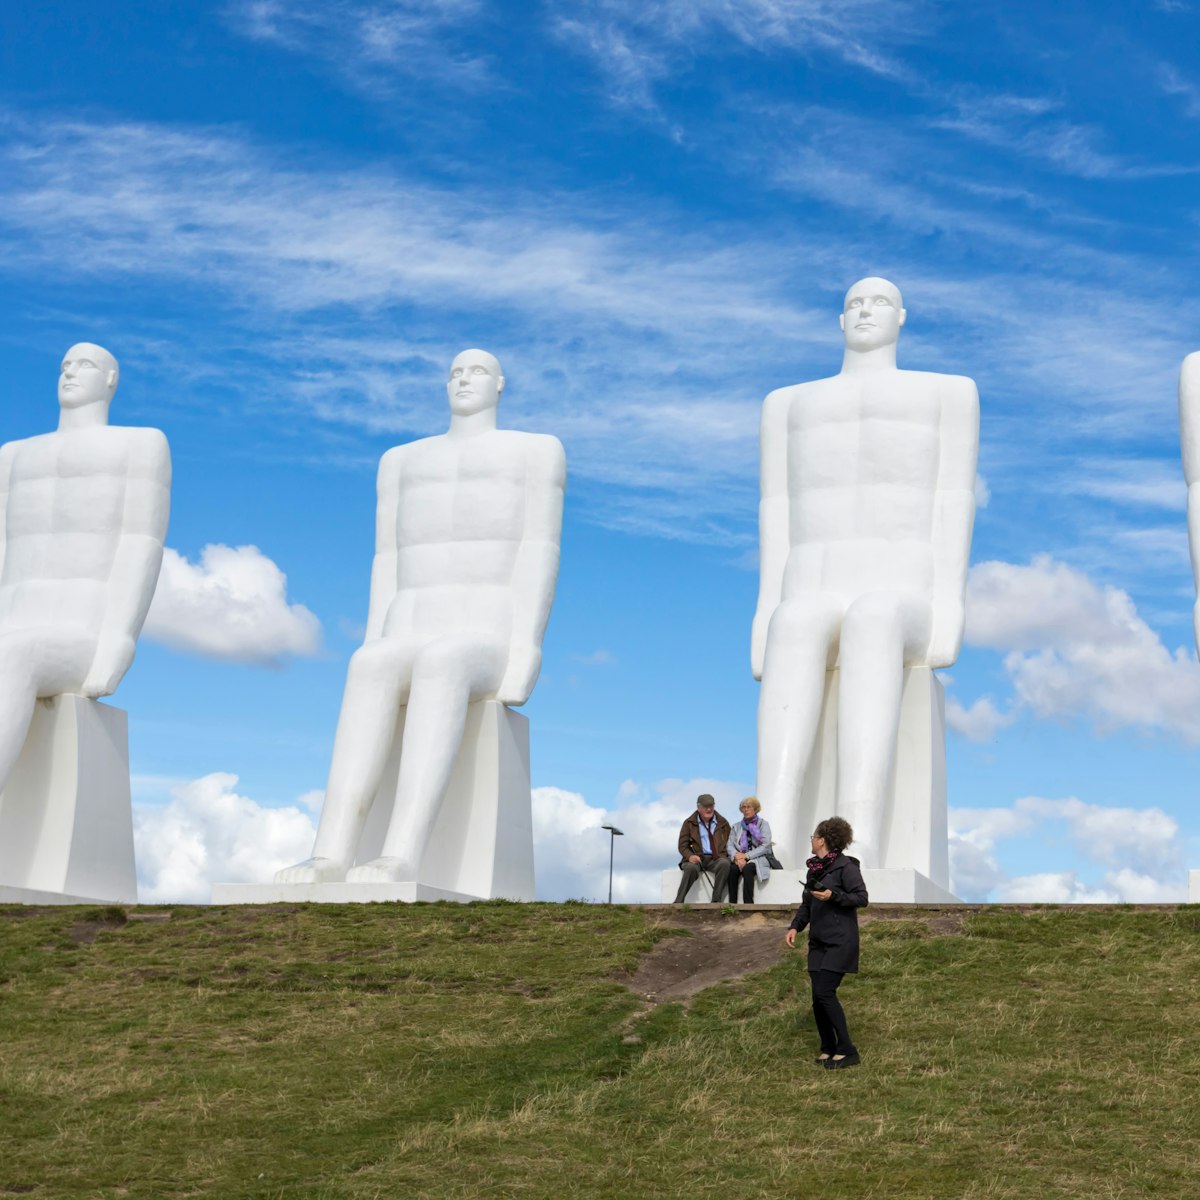 The colossal sculpture "Men at Sea“ aka  "Mennesket ved havet“ by Svend Wiig Hansen on the shore near the Esbjerg's harbor.